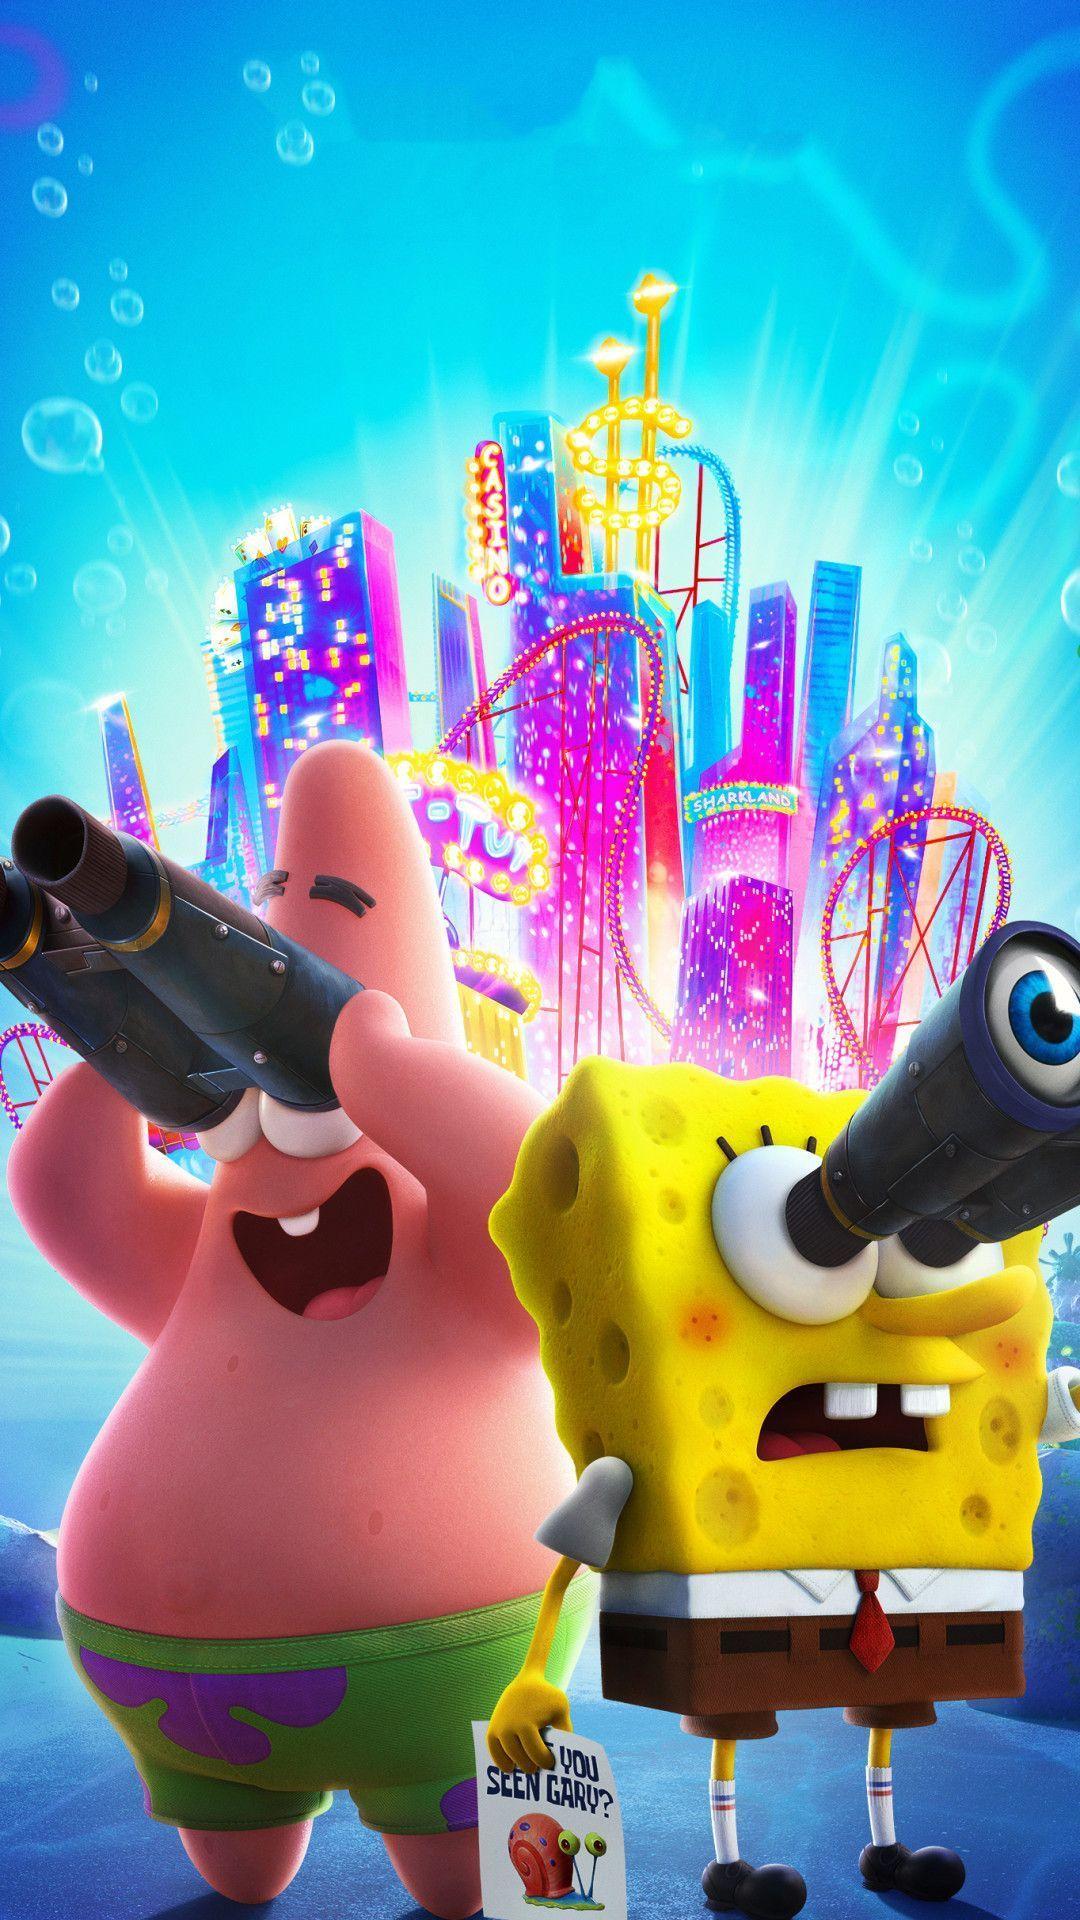 the spongebob squarepants movie full movie free download